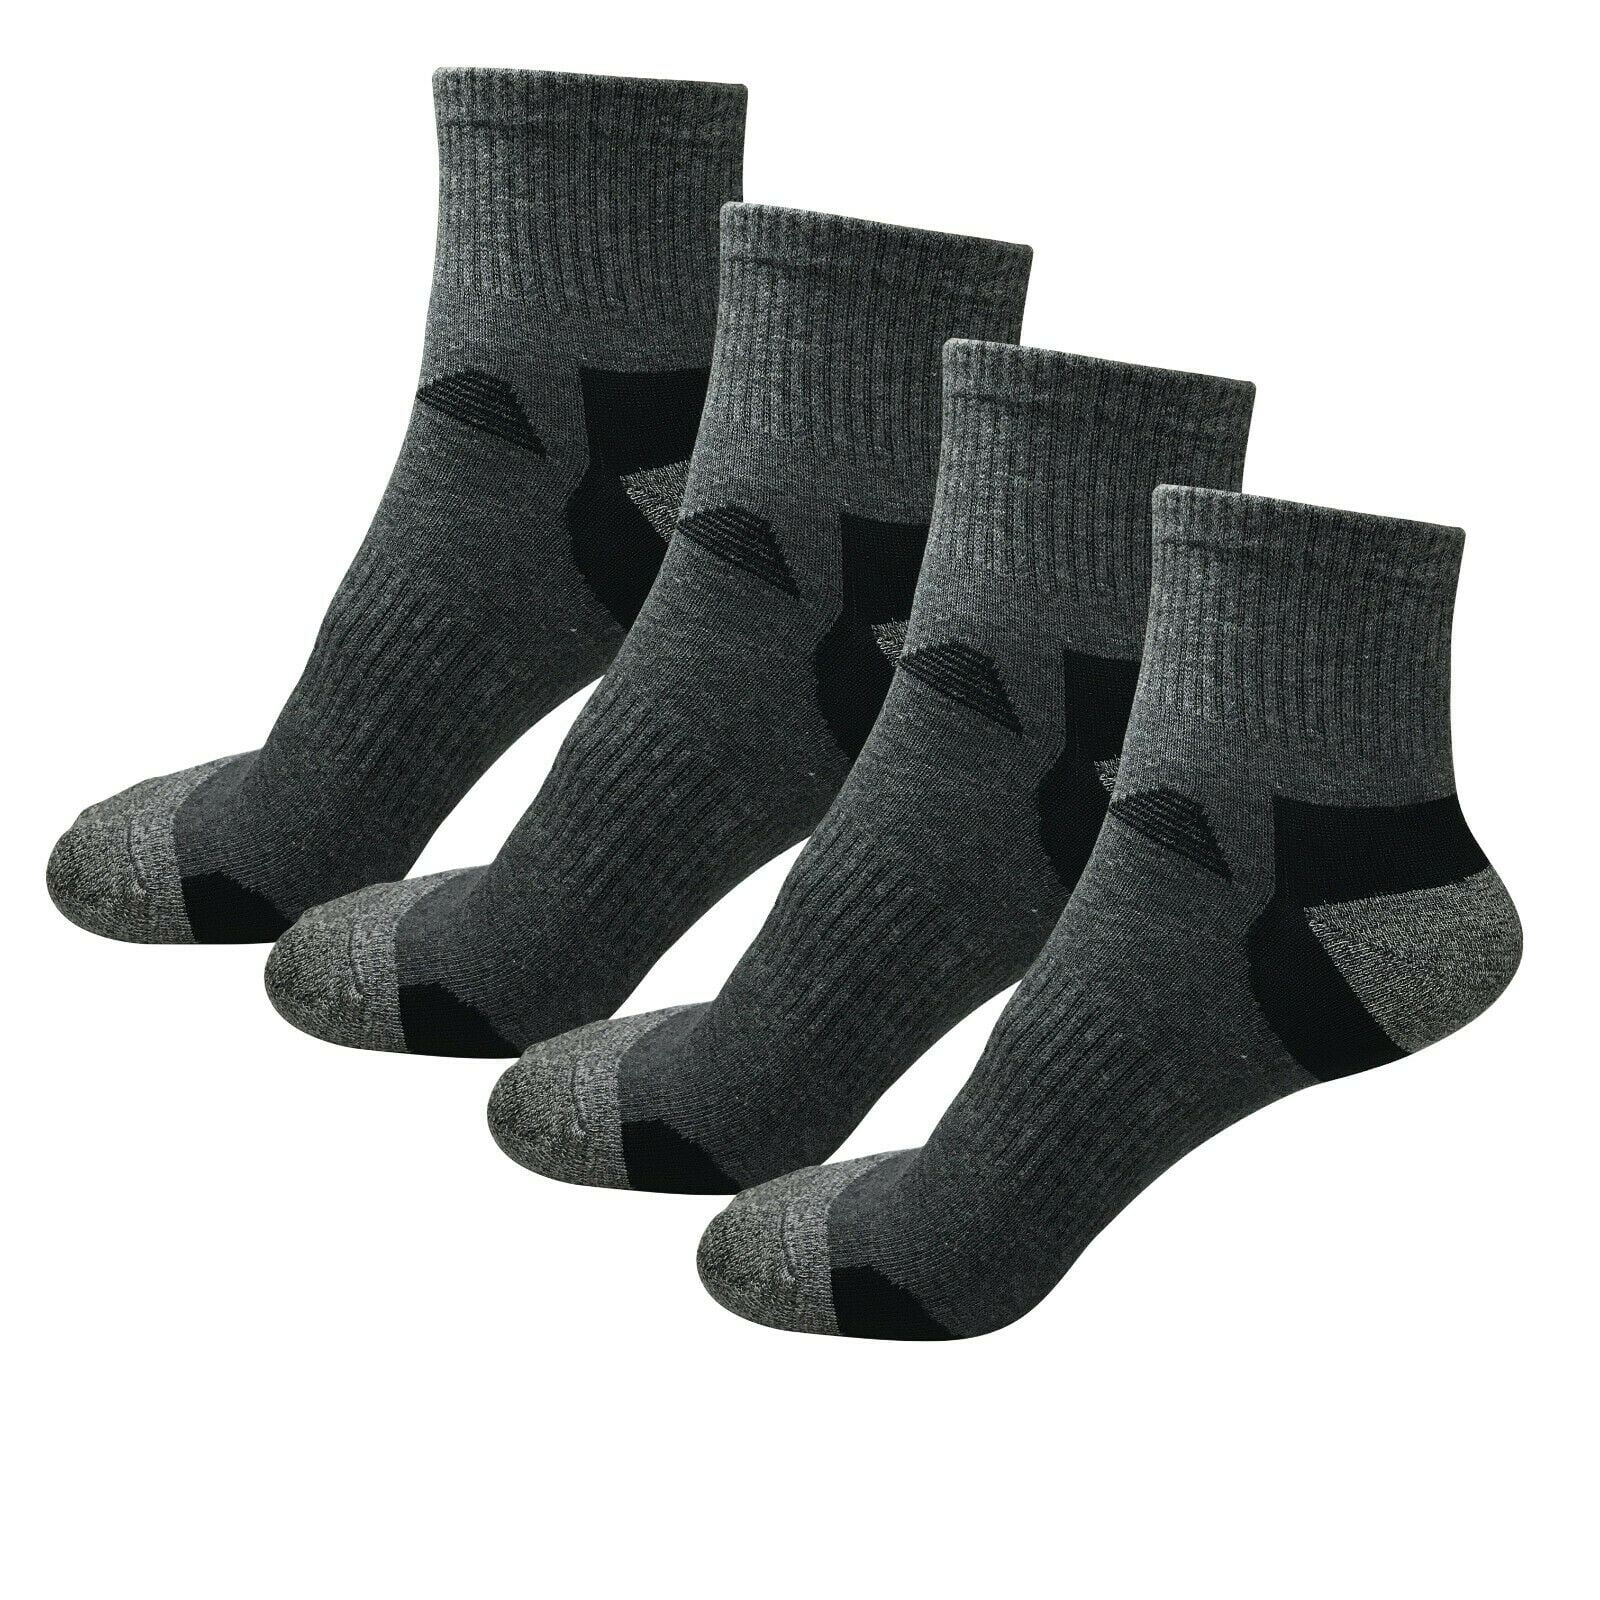 3-12 Pairs Men ST Pattern Cotton Casual Mid Calf Dress Socks Size 10-13 